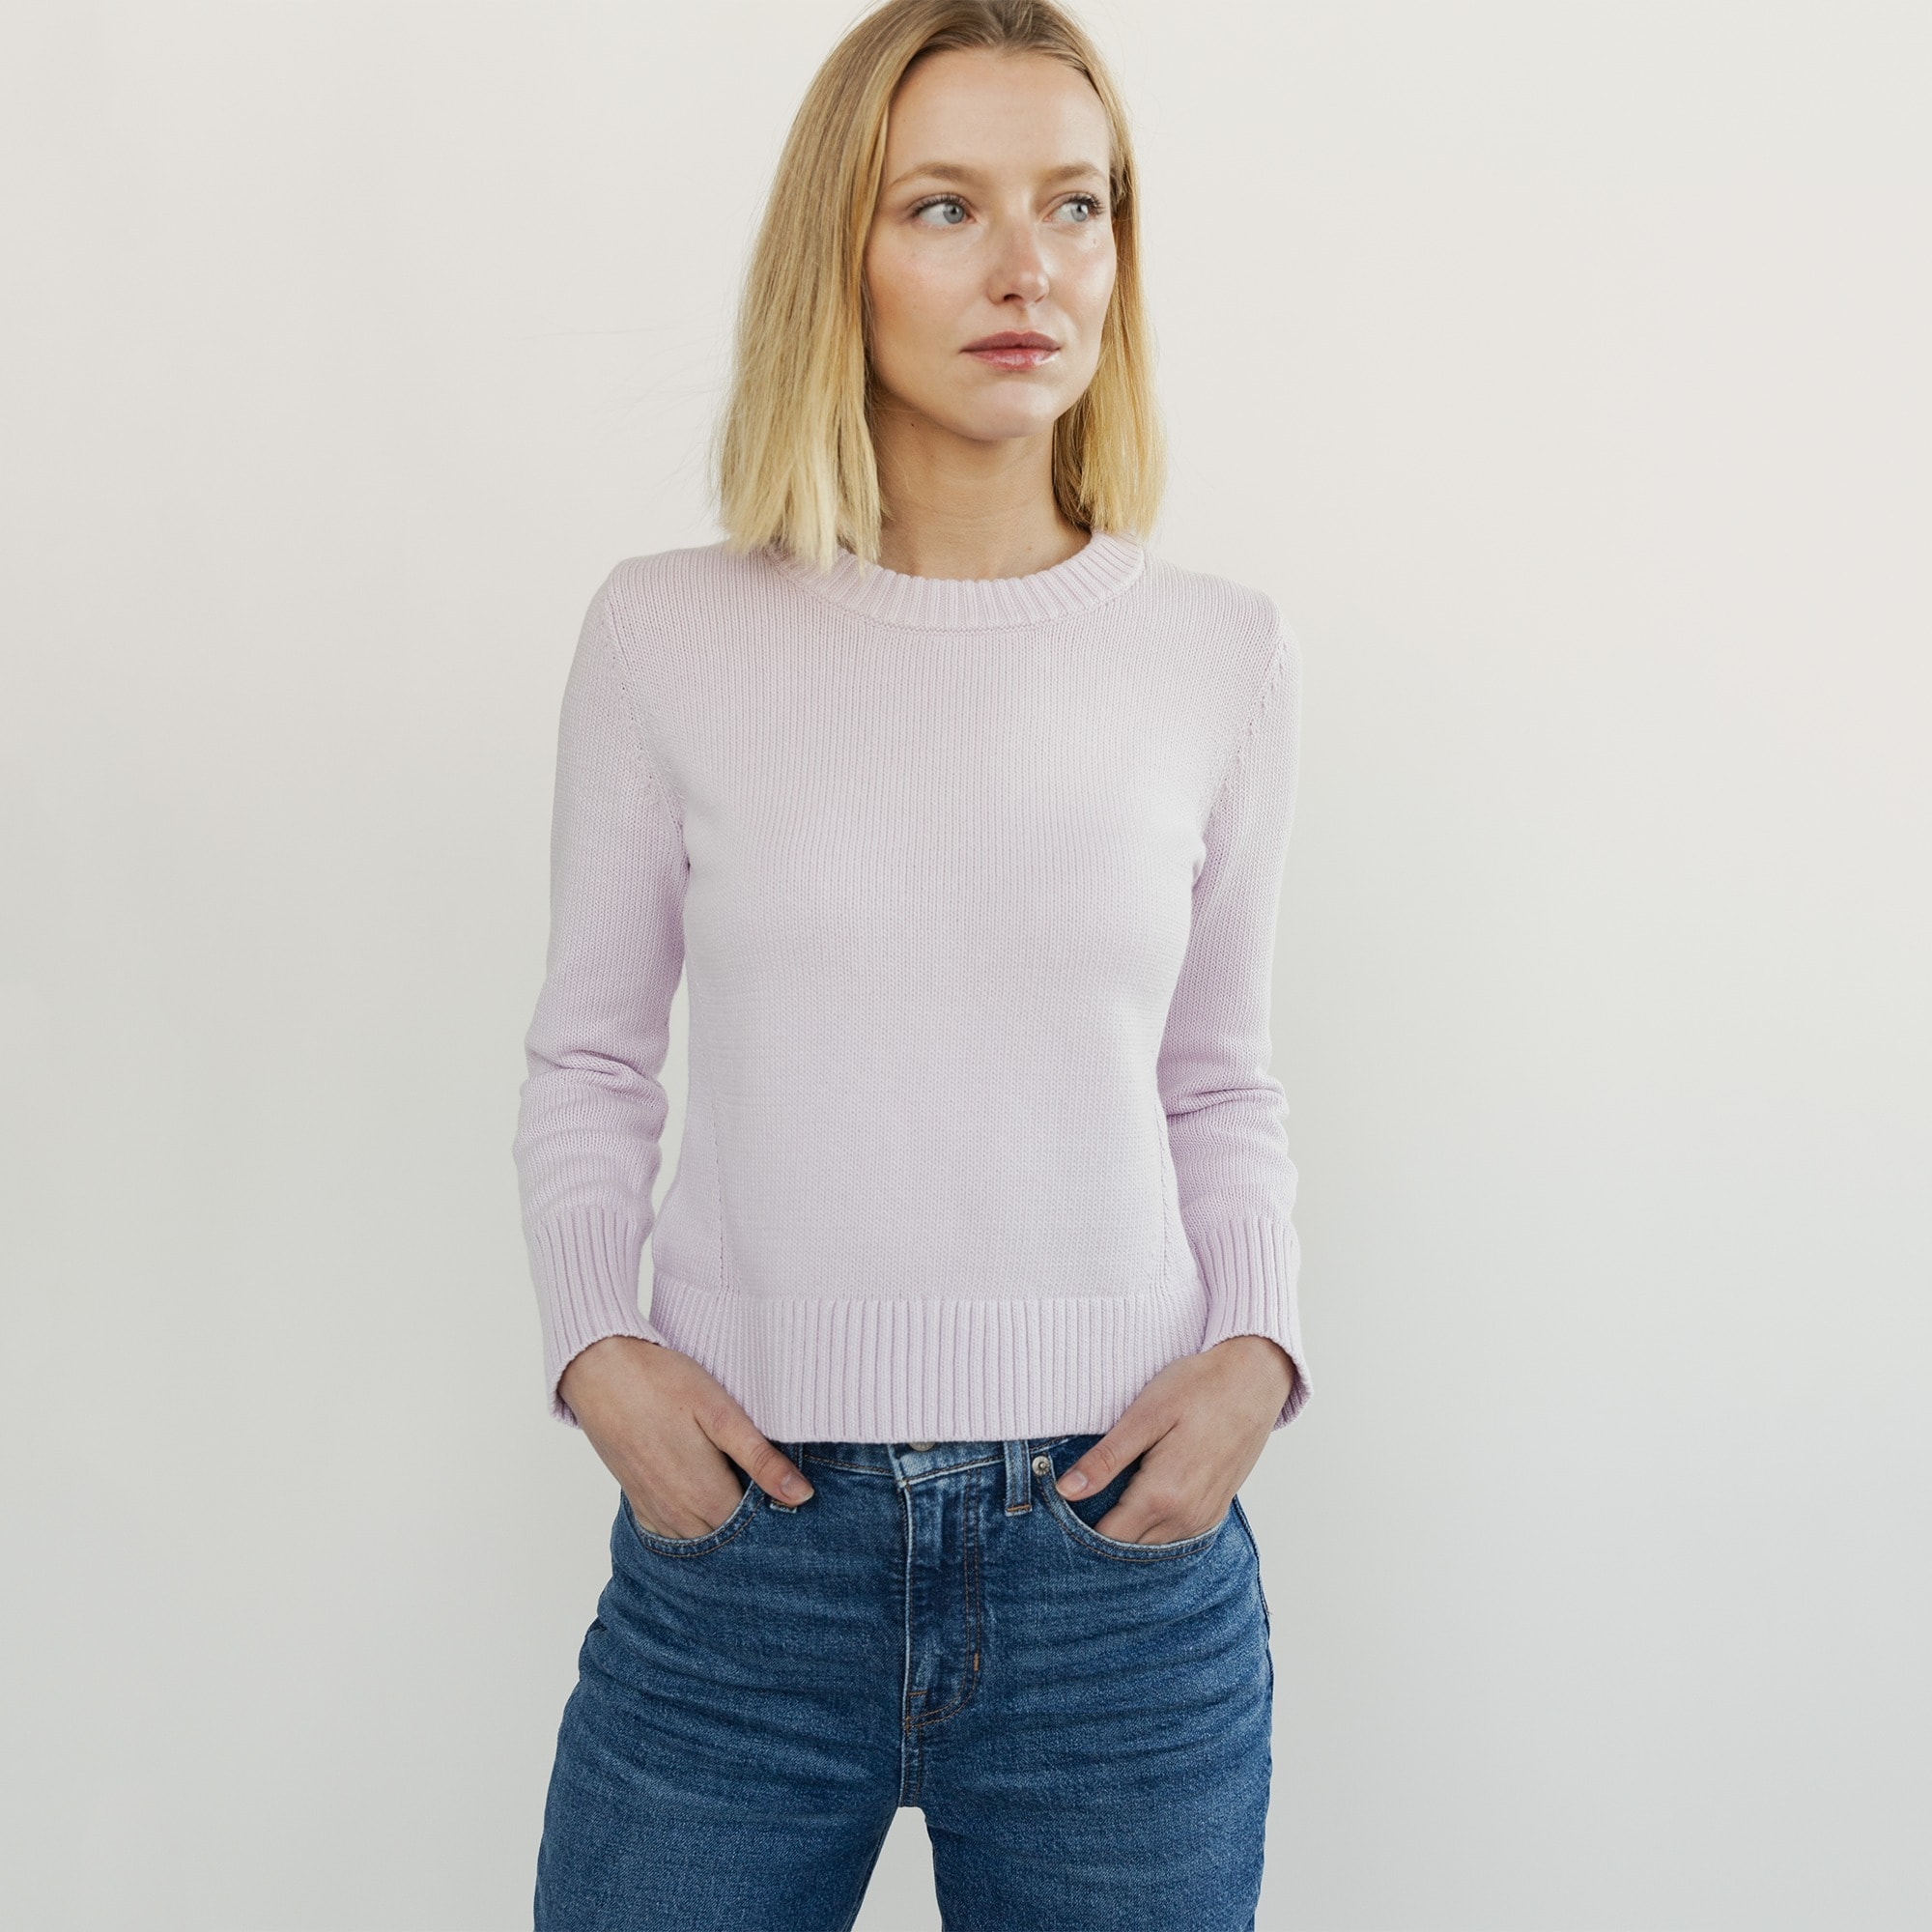  State of Cotton NYC Castine medium-weight crewneck sweater